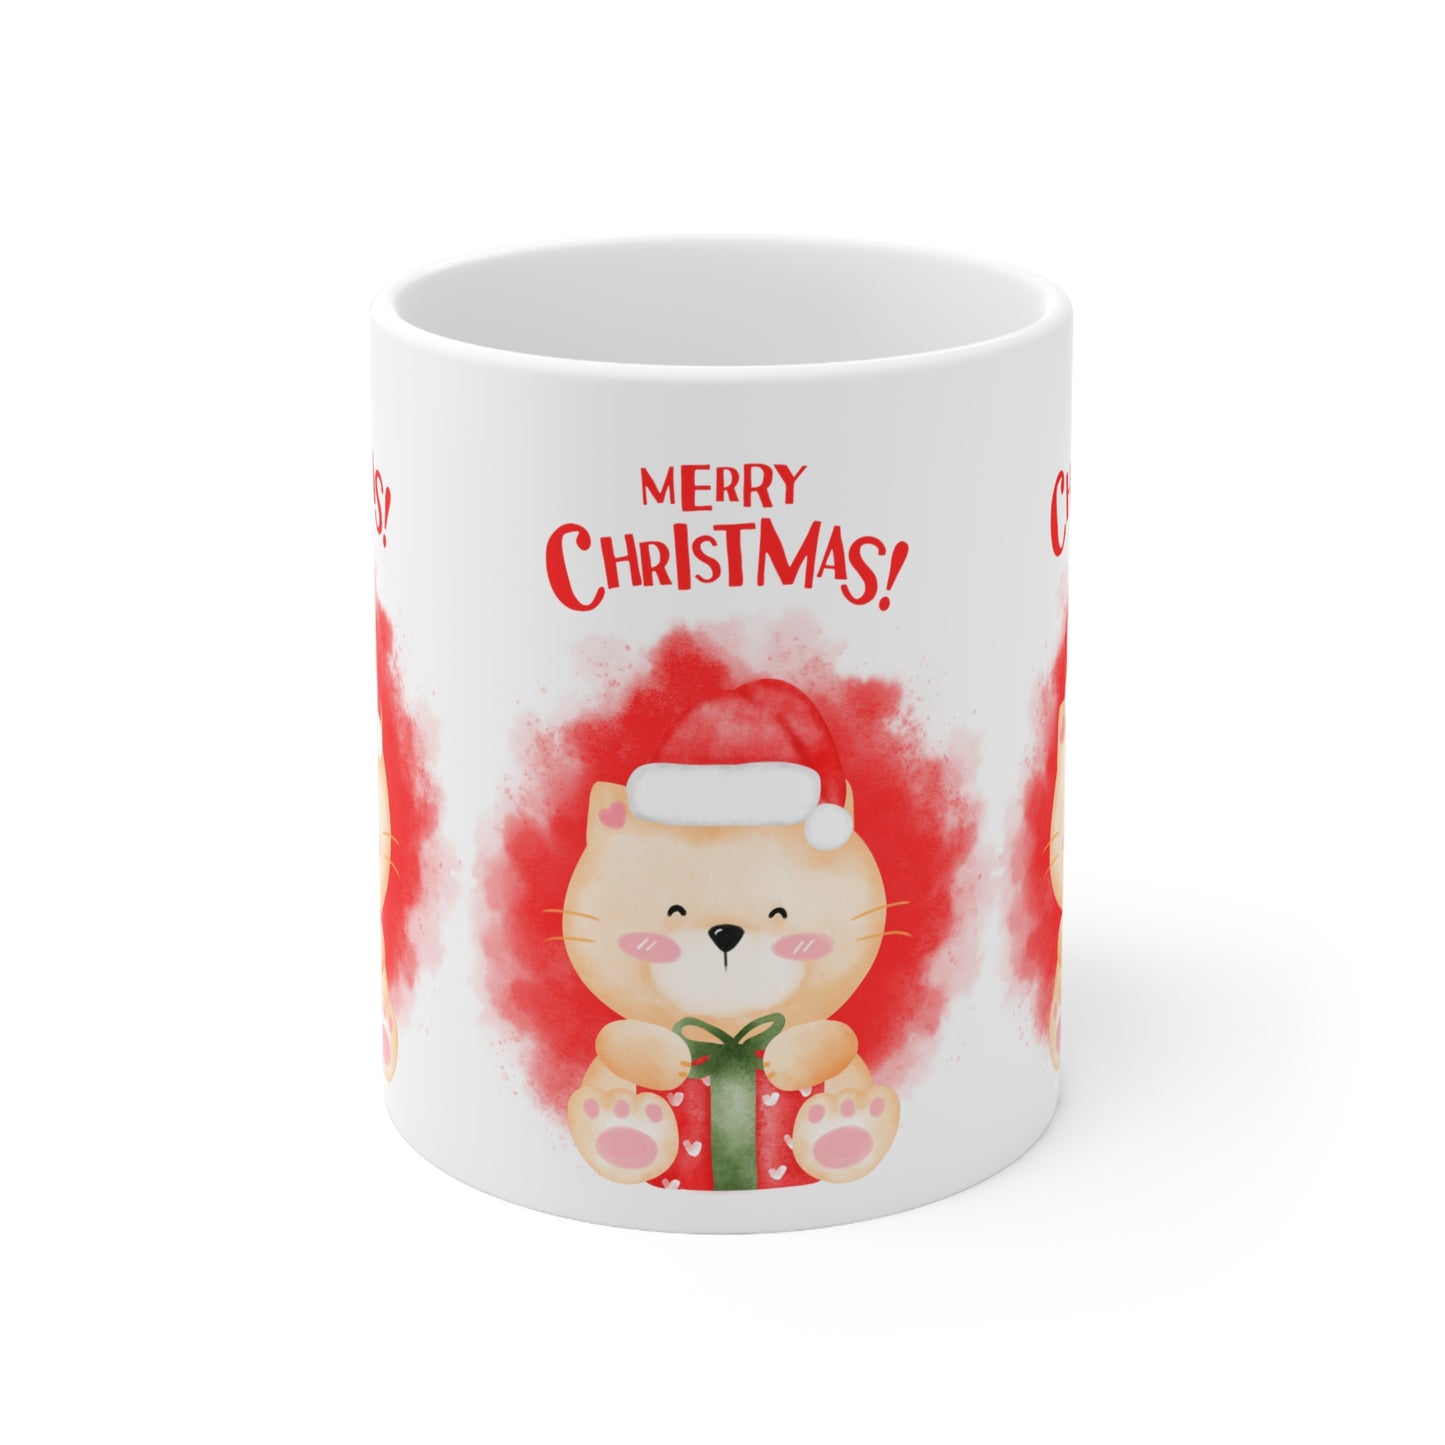 Merry Christmas with Teddy Printed Ceramic Mug, 11oz